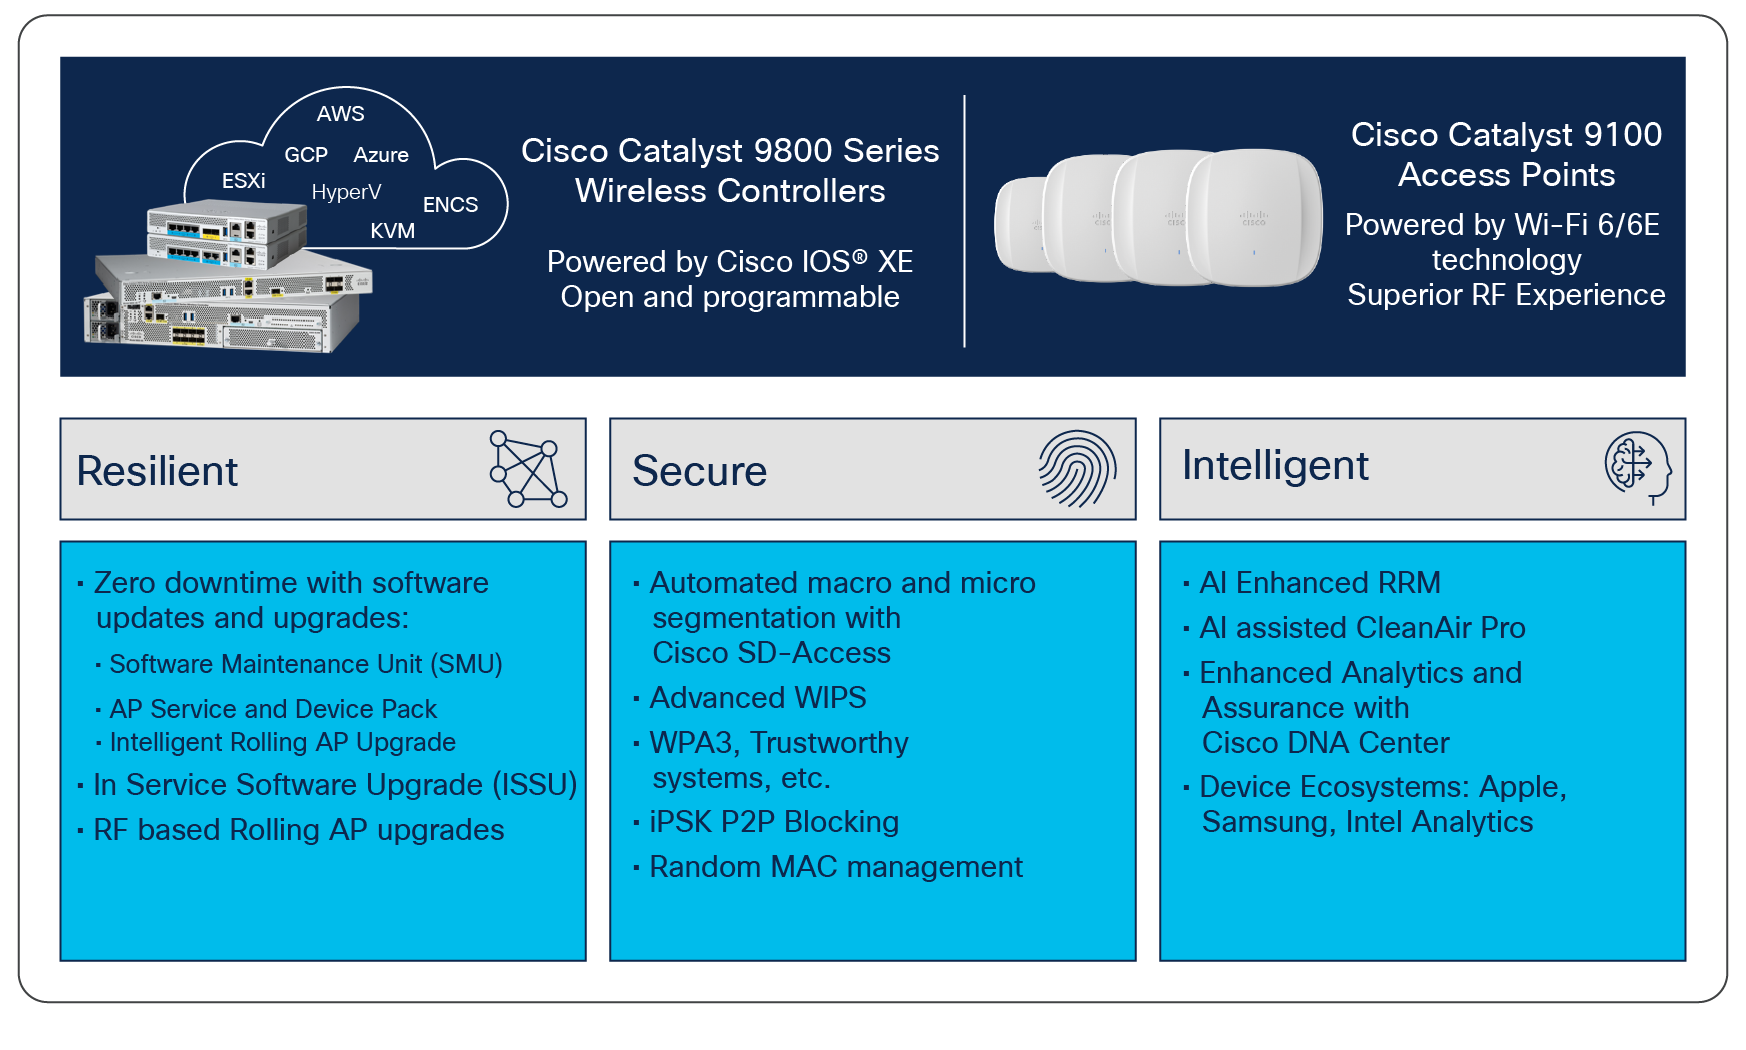 Cisco® Catalyst® 9800 Series (C9800) is the next-generation wireless LAN controller